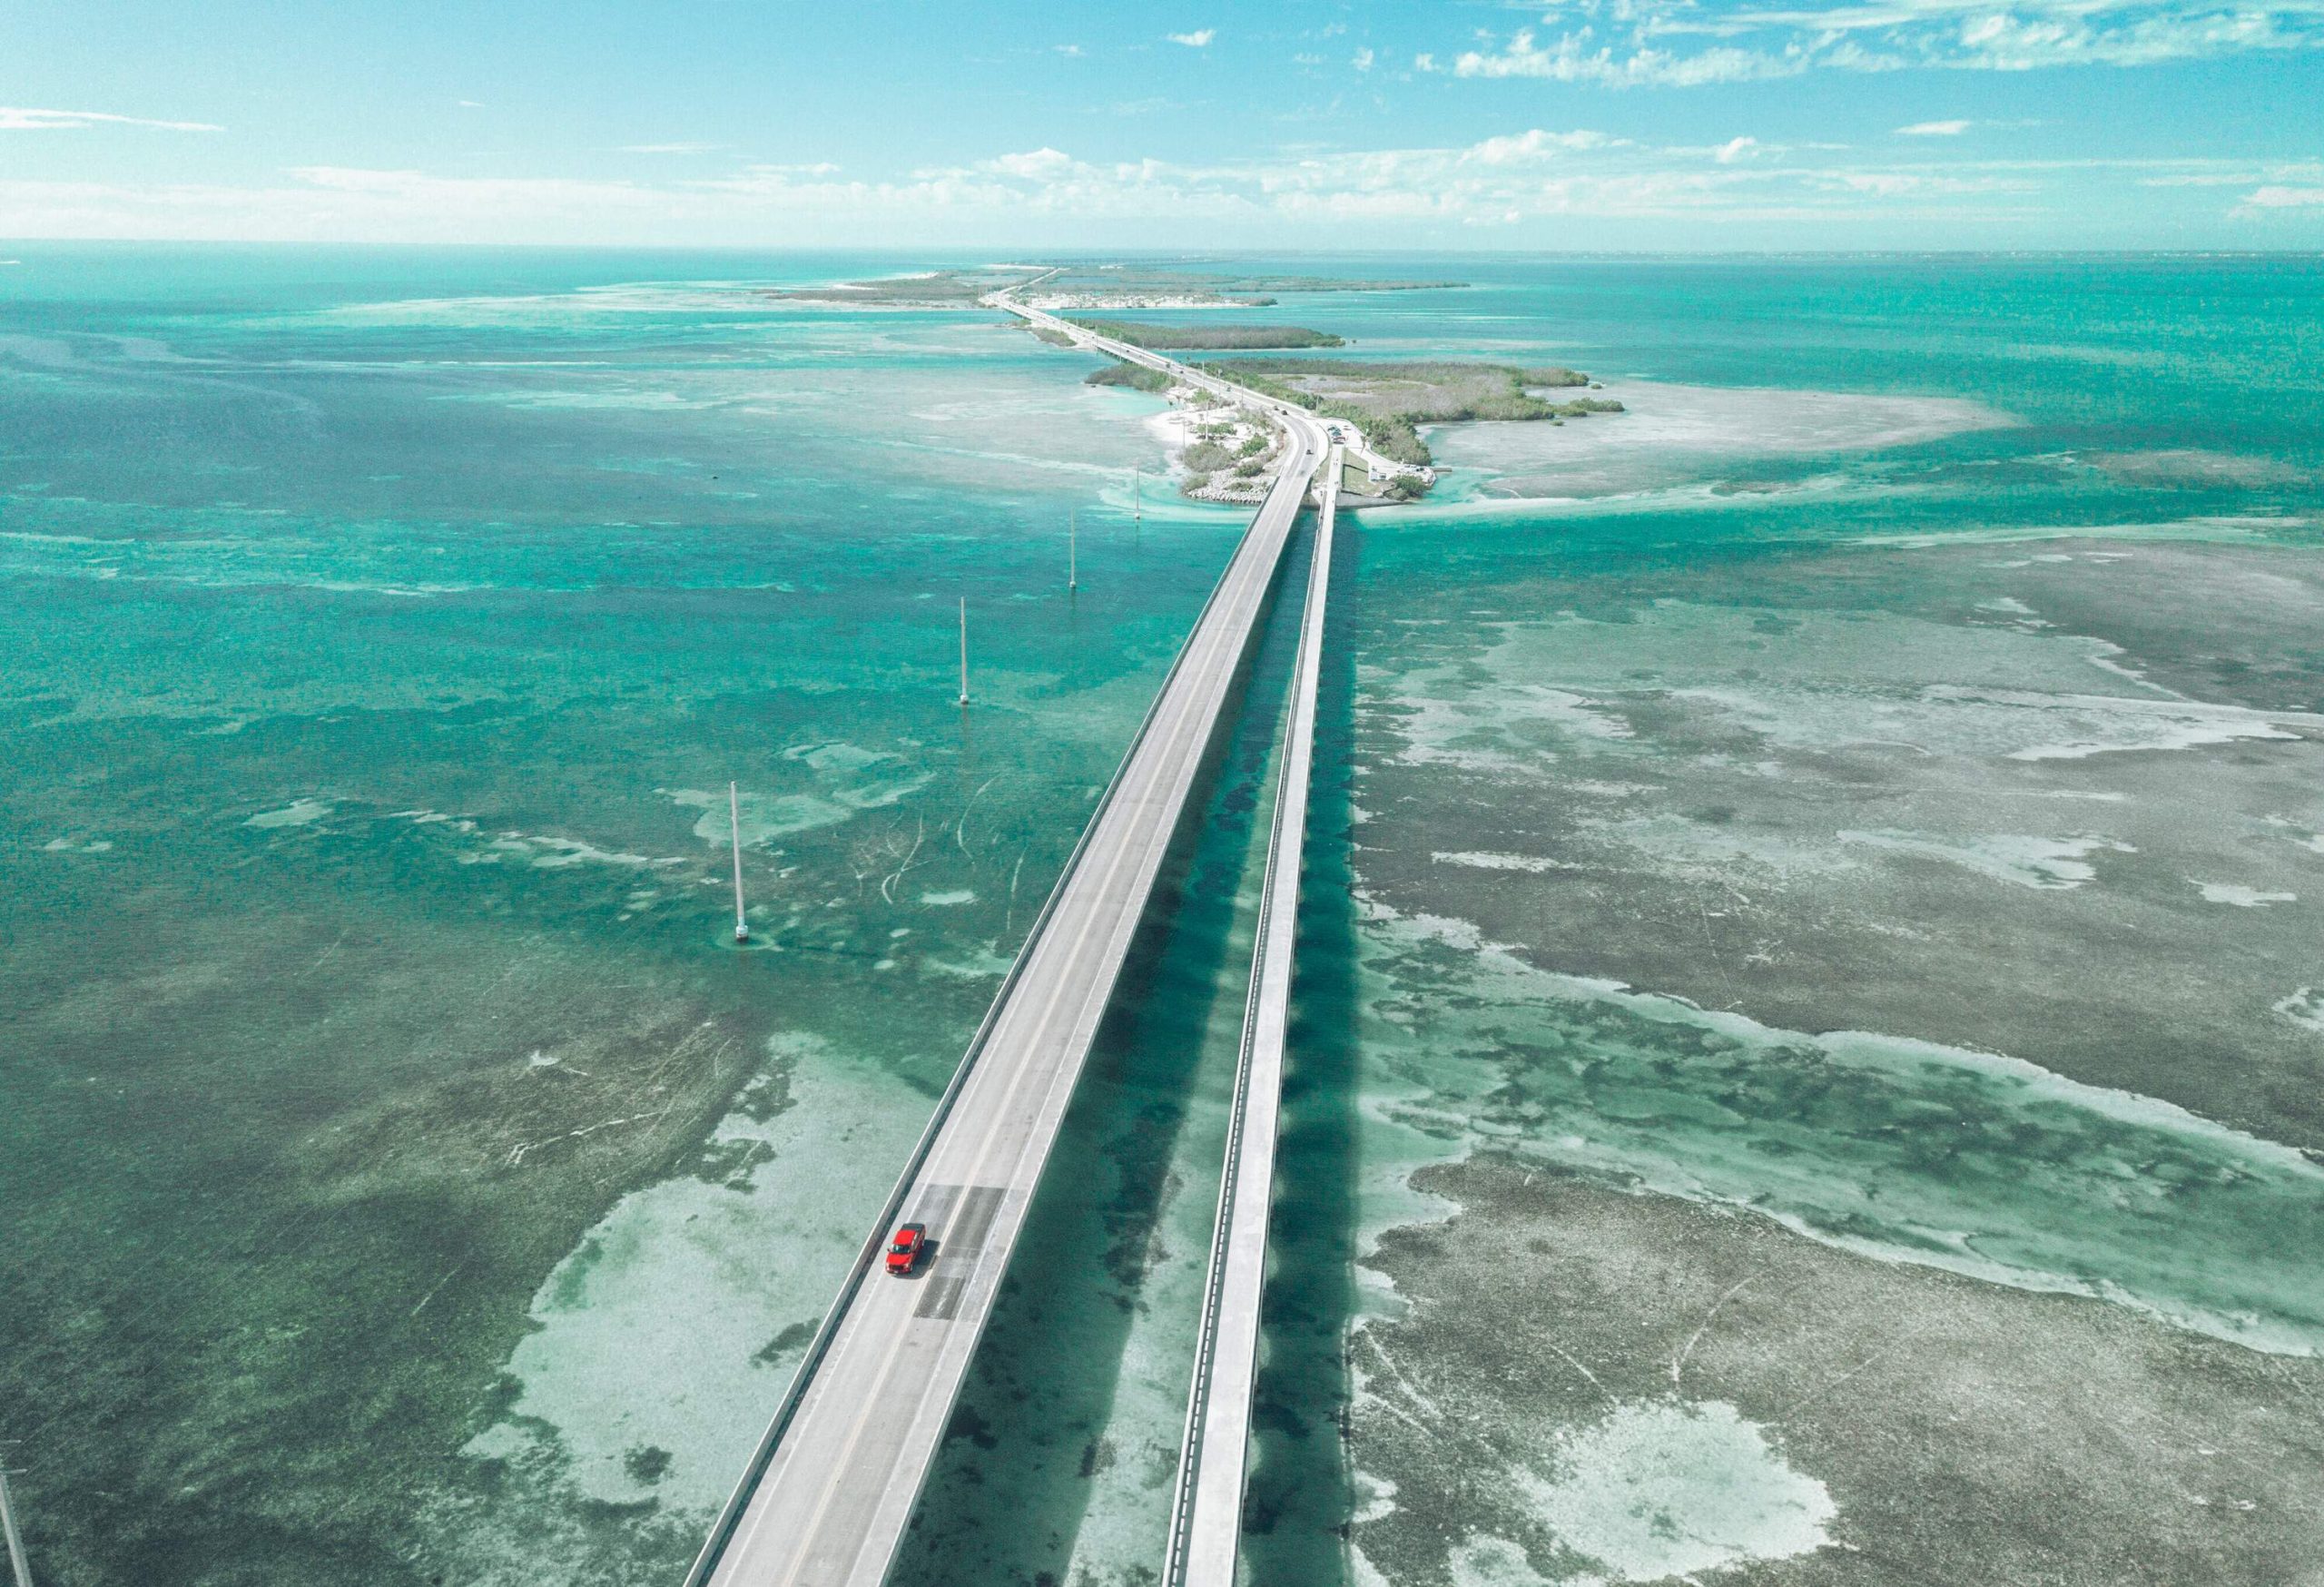 A lone car travels down a road bridge across a wide ocean.